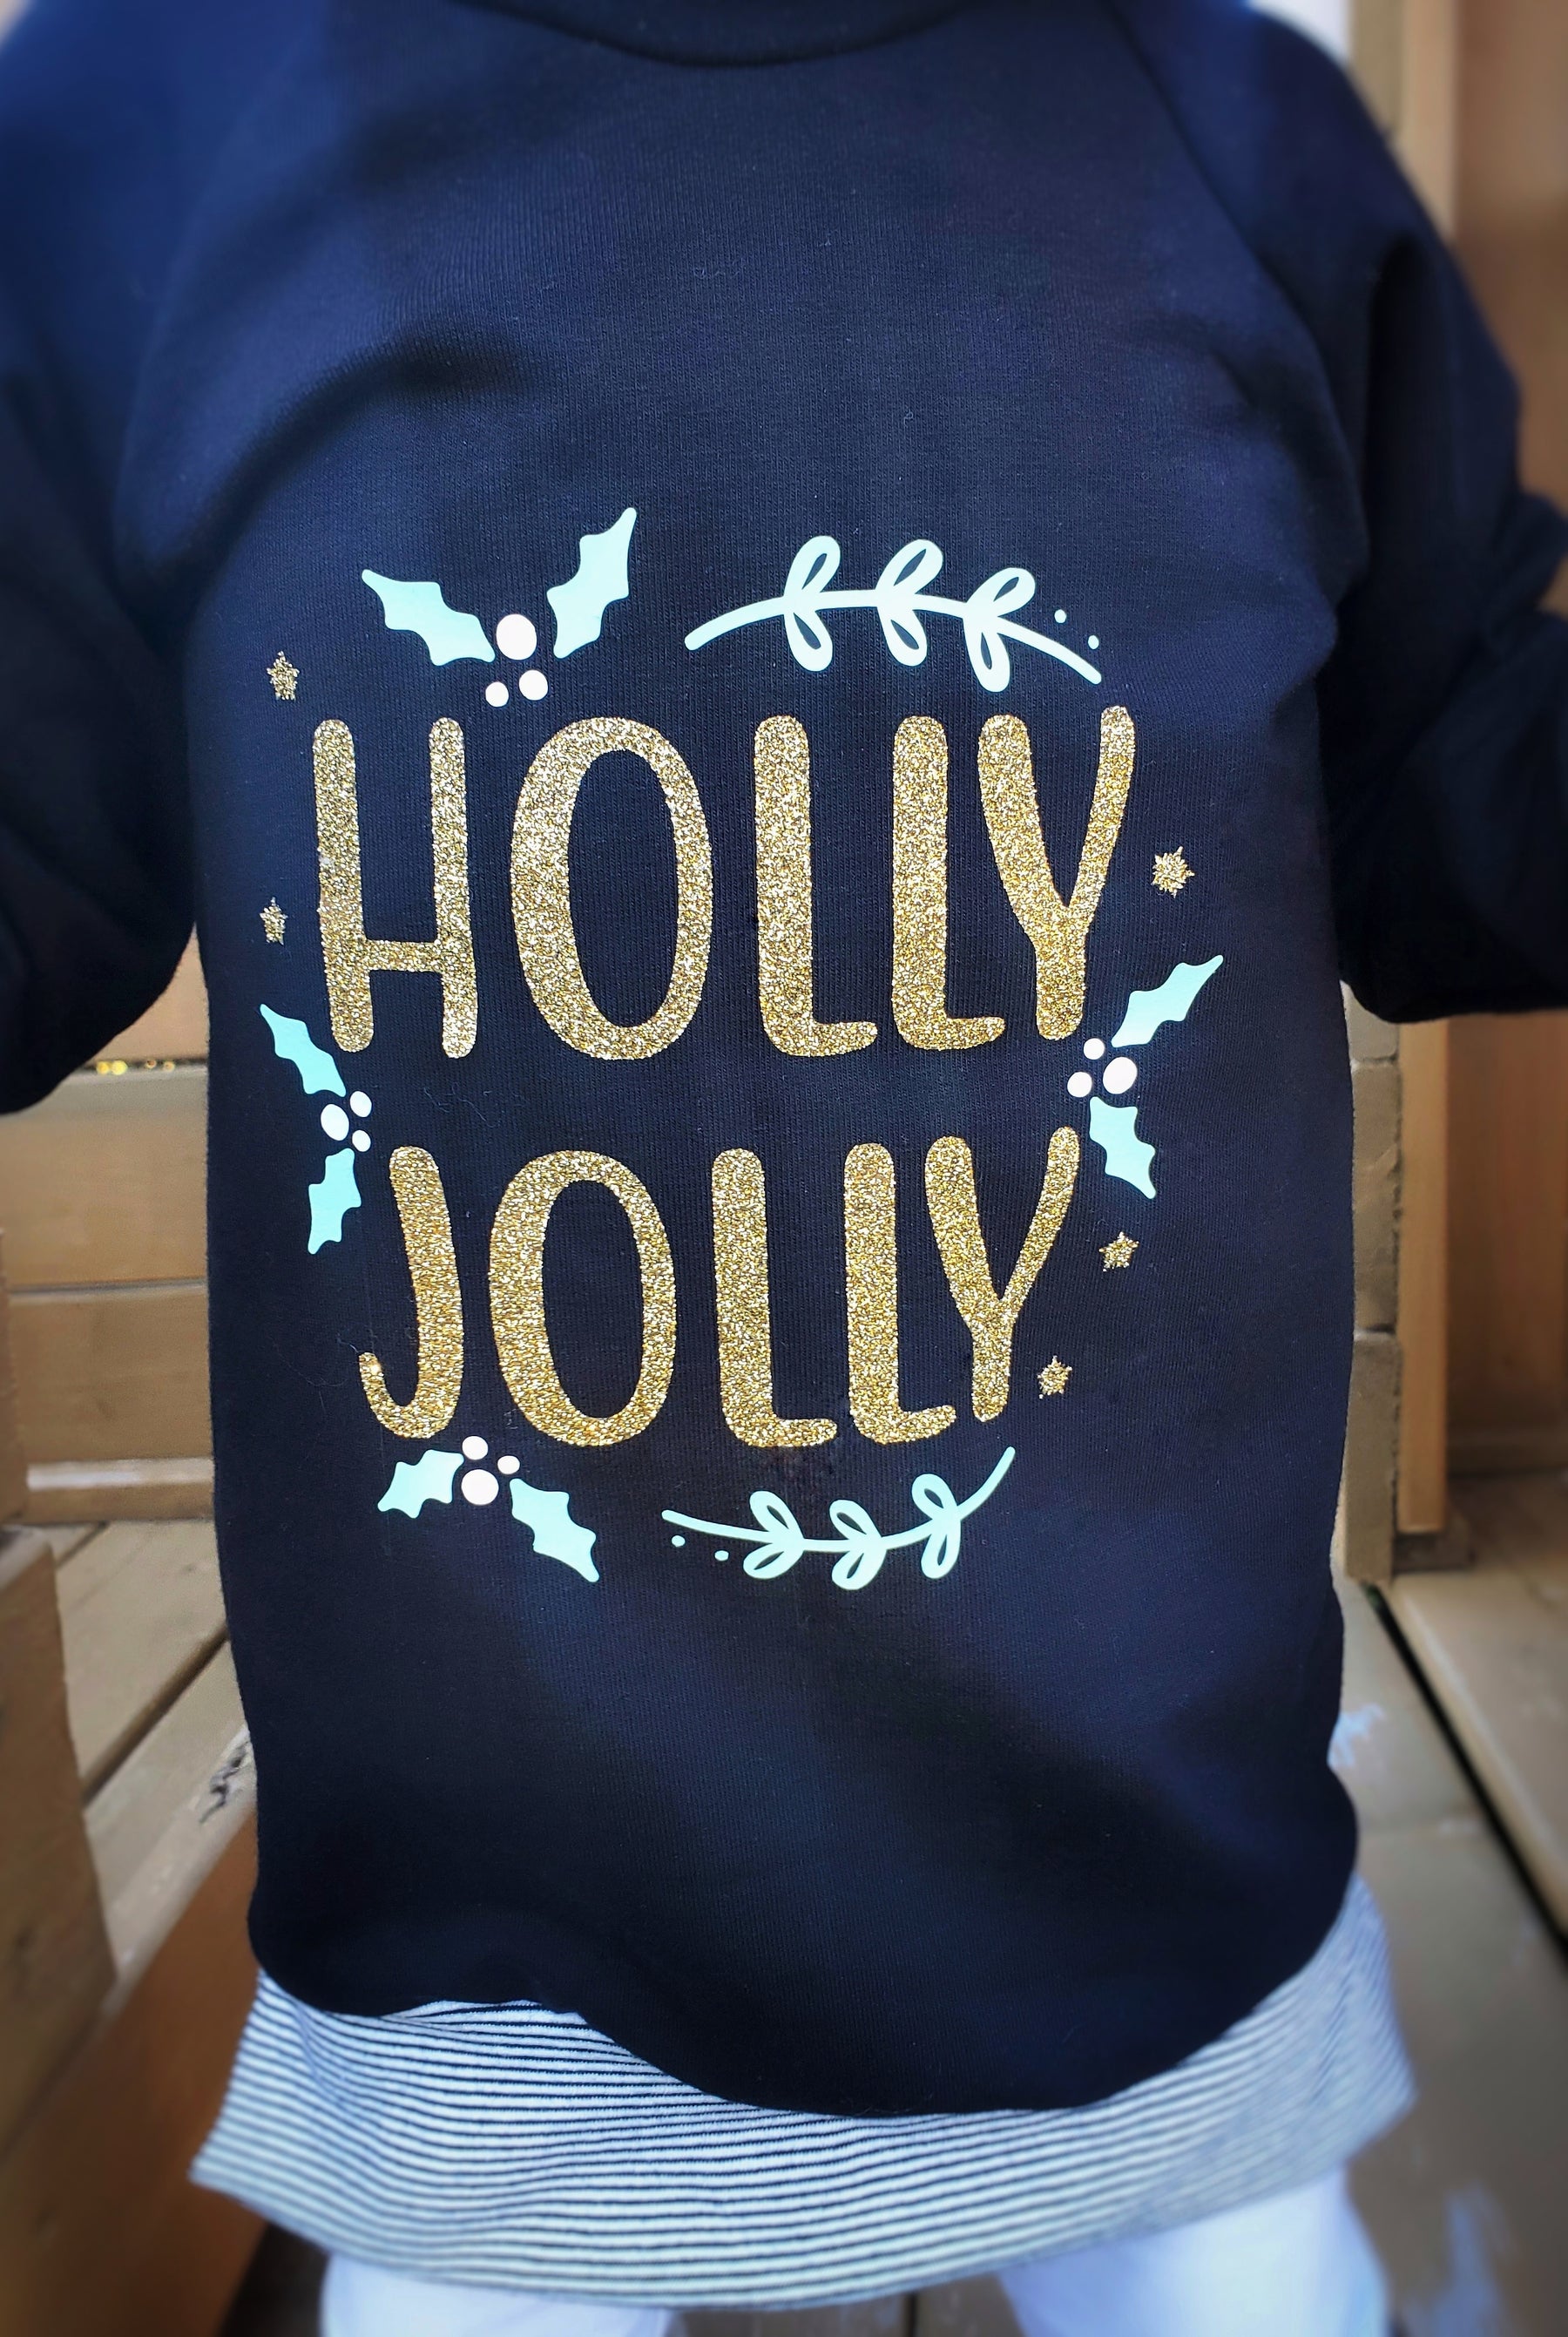 Holly Jolly Holiday Cut File